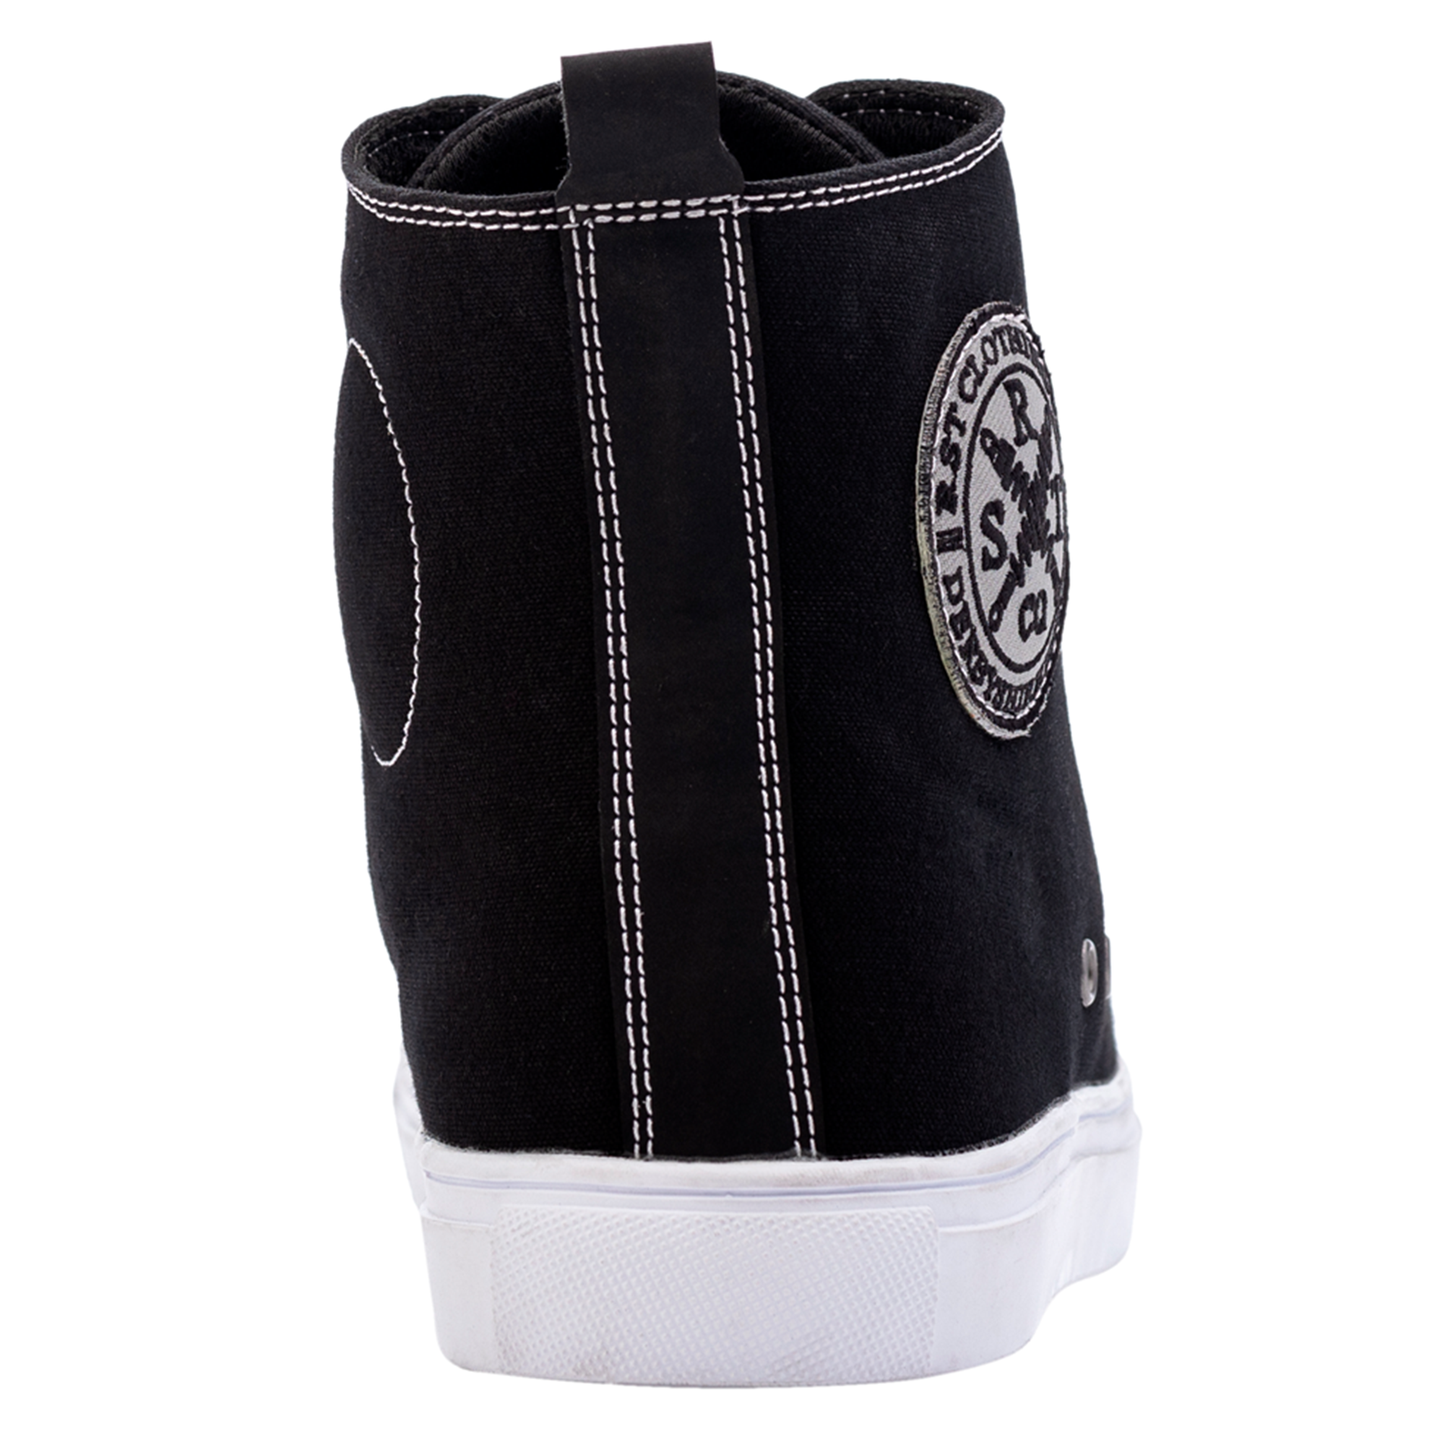 RST Urban 3 Moto Sneaker Men's CE Boot - Black